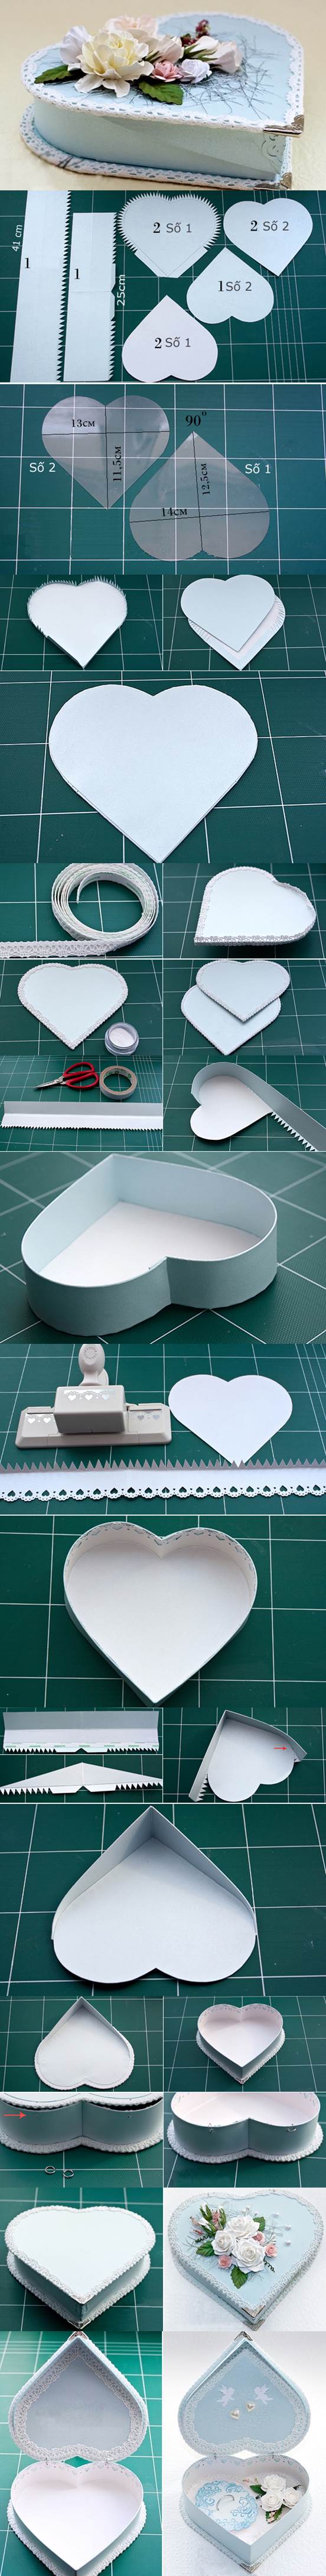 DIY Heart Shaped Gift Box 2